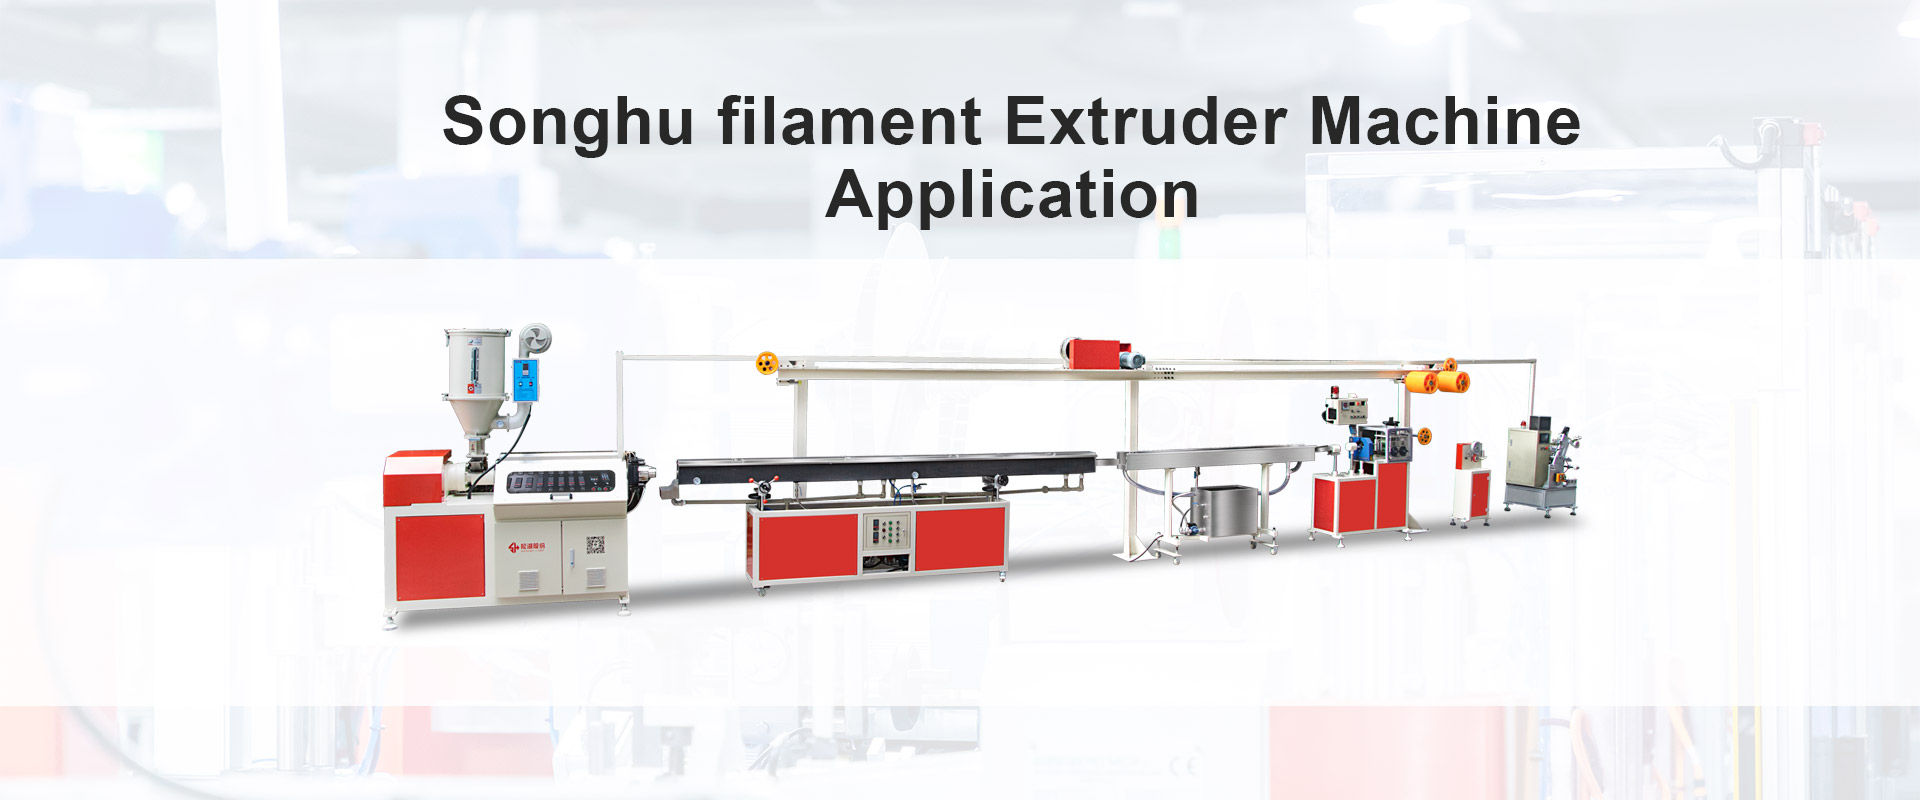 Songhu 3D Filament Extrusion Machine Application